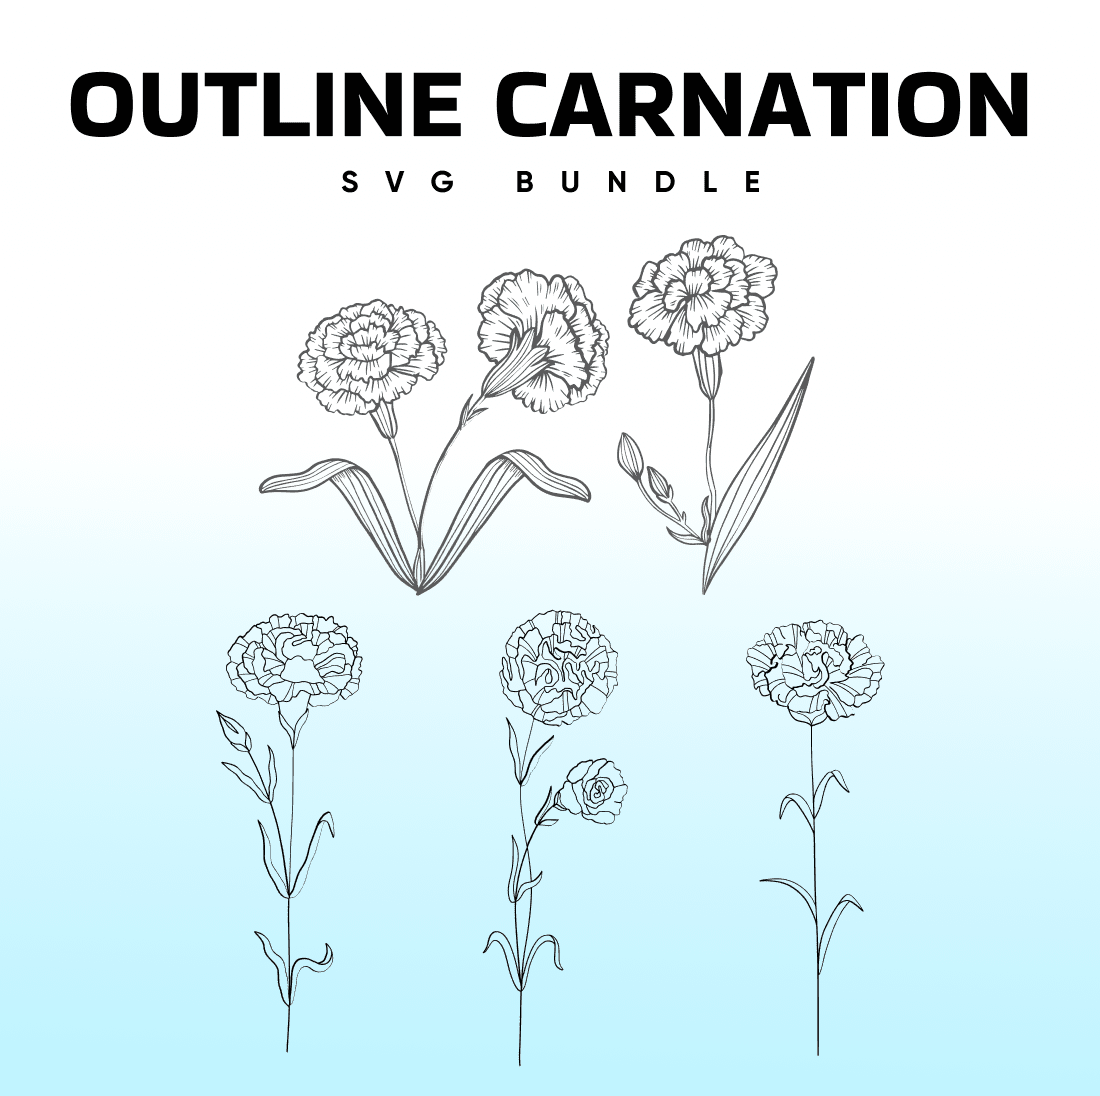 Outline of carnation flower bushes.